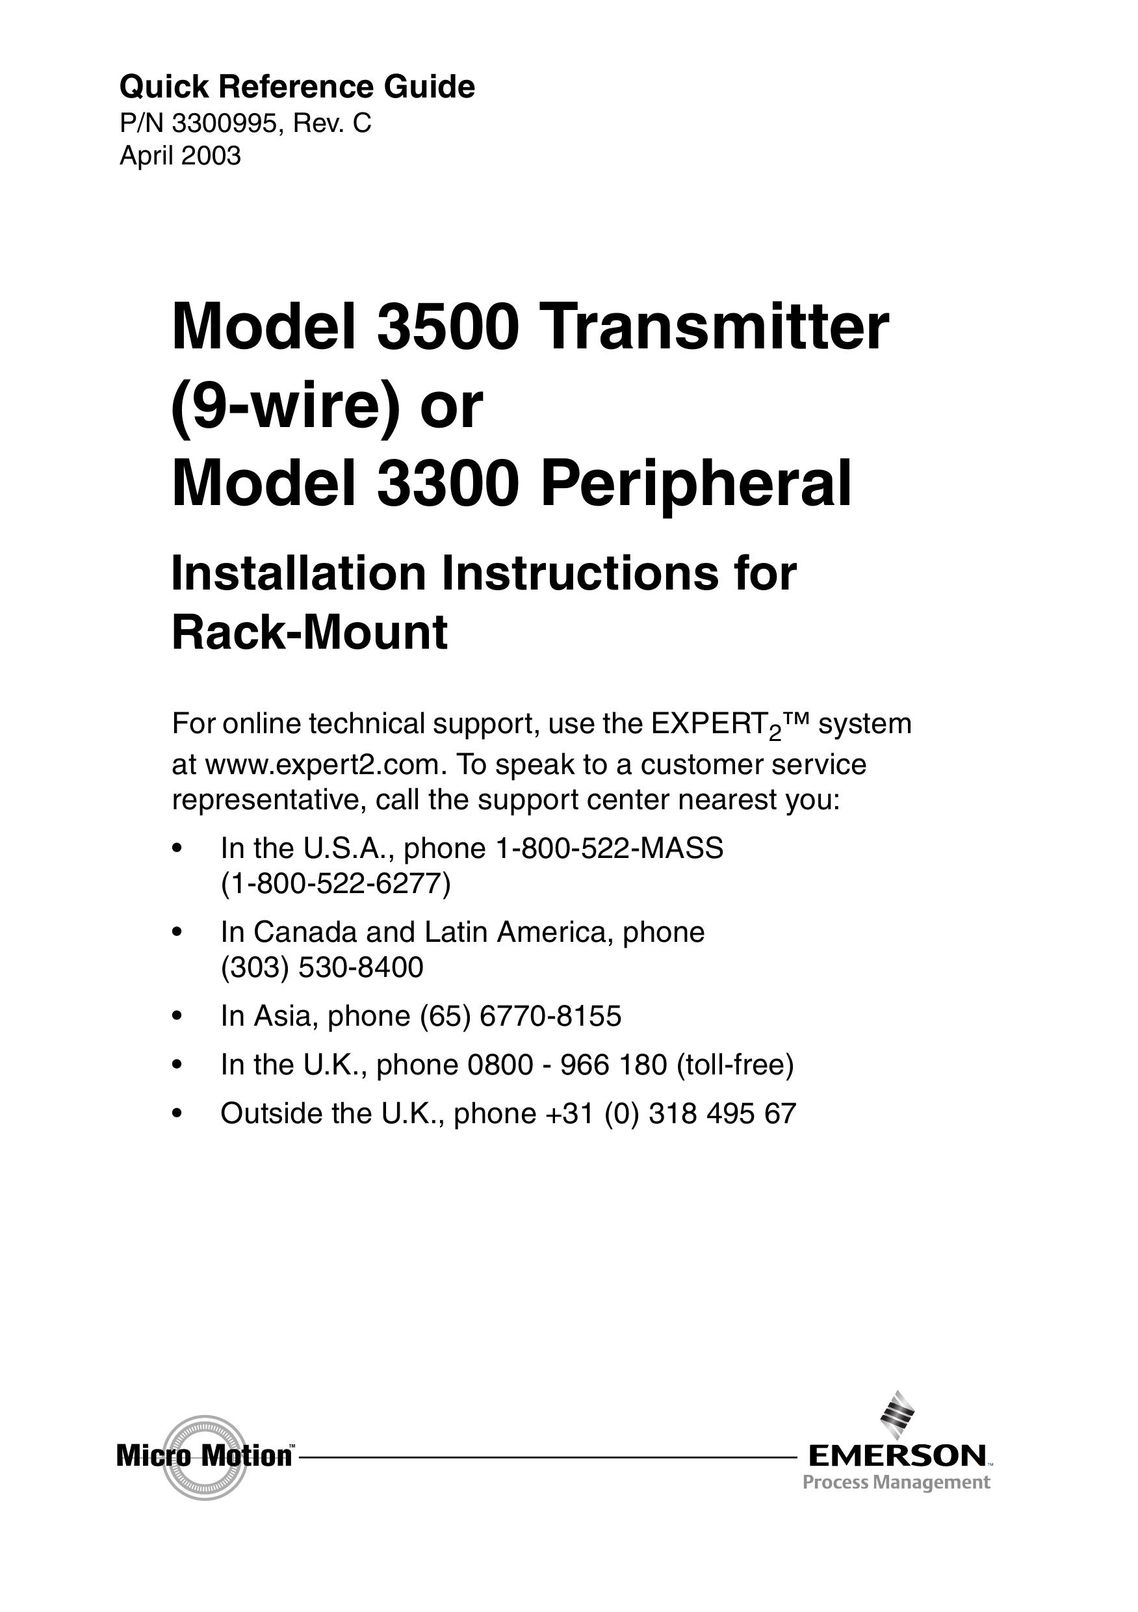 Emerson Process Management 3500 Transmitter Satellite Radio User Manual